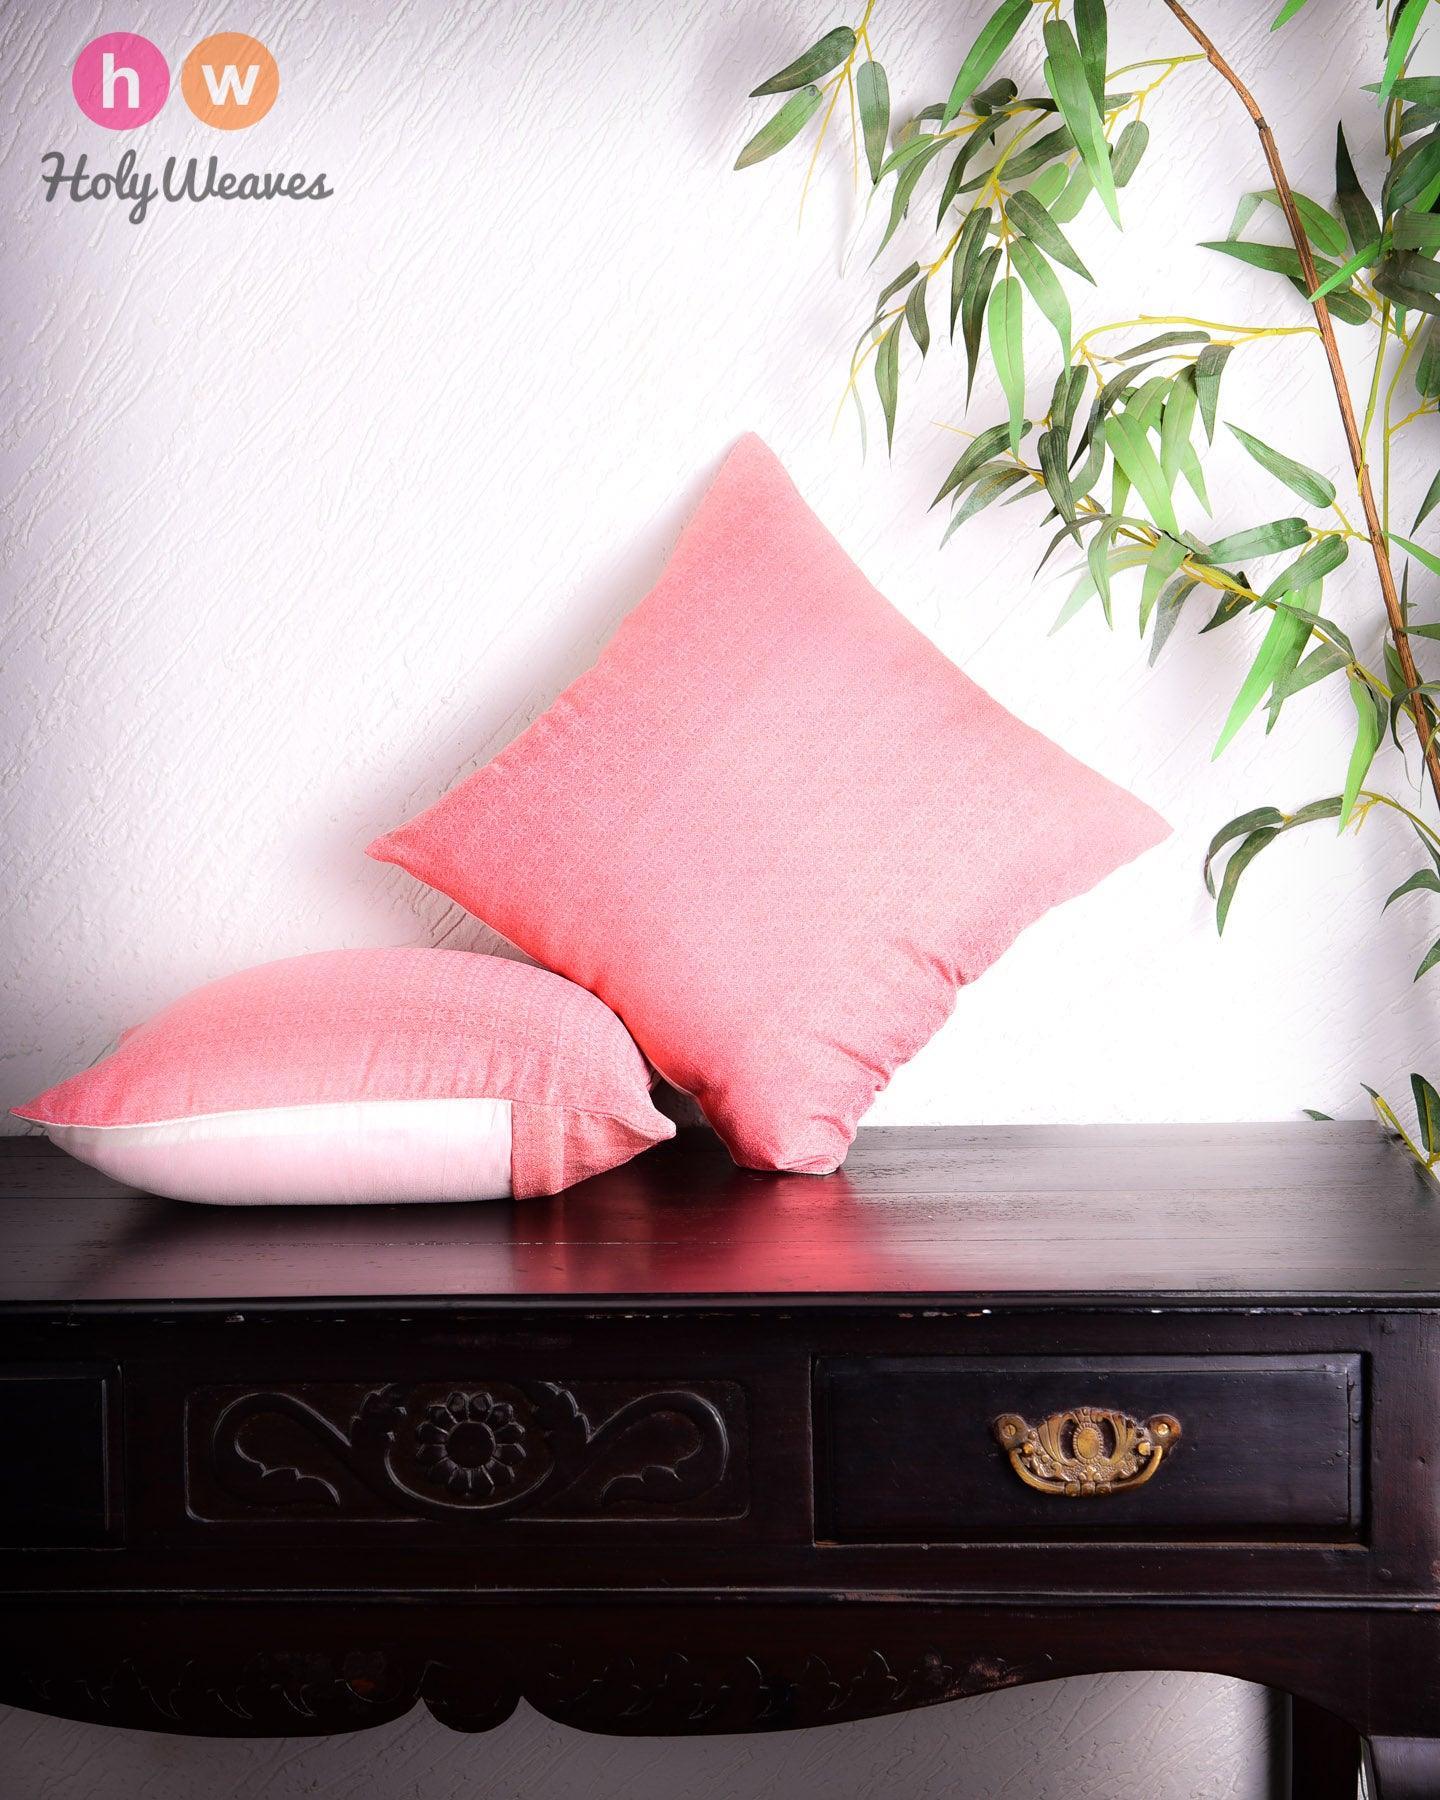 Salmon Pink Banarasi Tanchoi Viscose Silk Cushion Cover 16" - By HolyWeaves, Benares